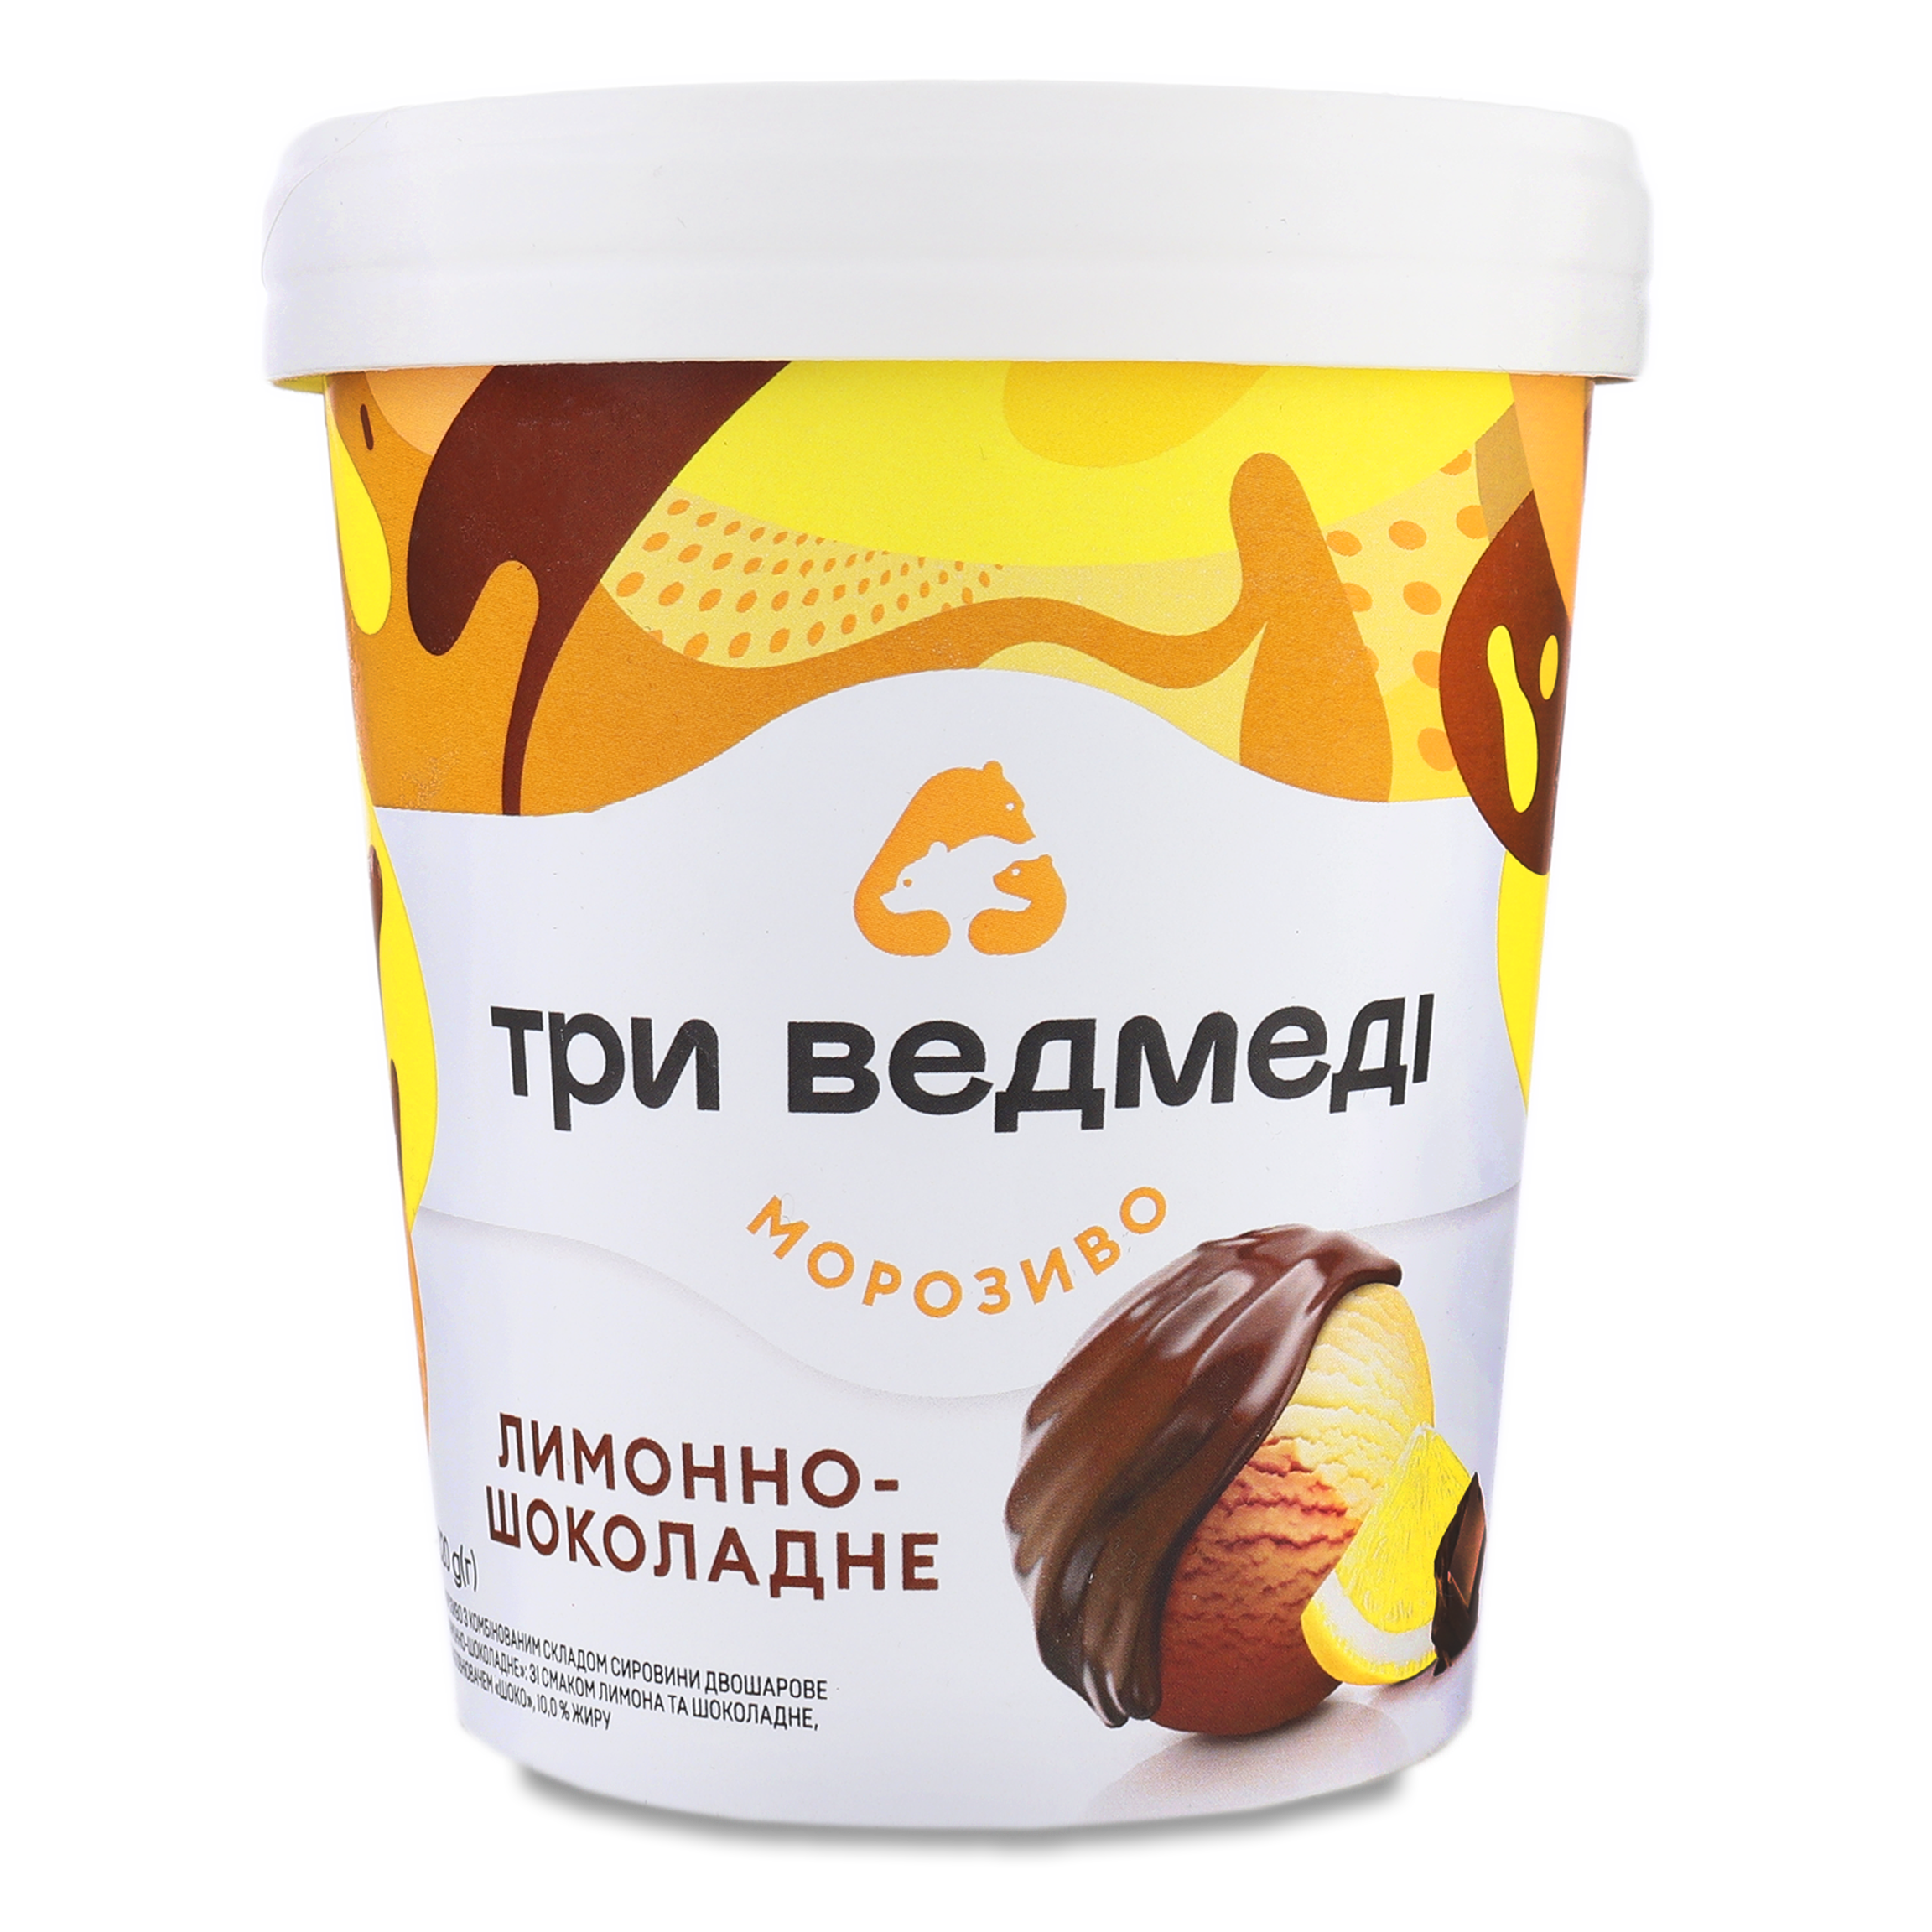 Try Vedmedi Lemon-Chocolate Flavored Ice Cream 320g